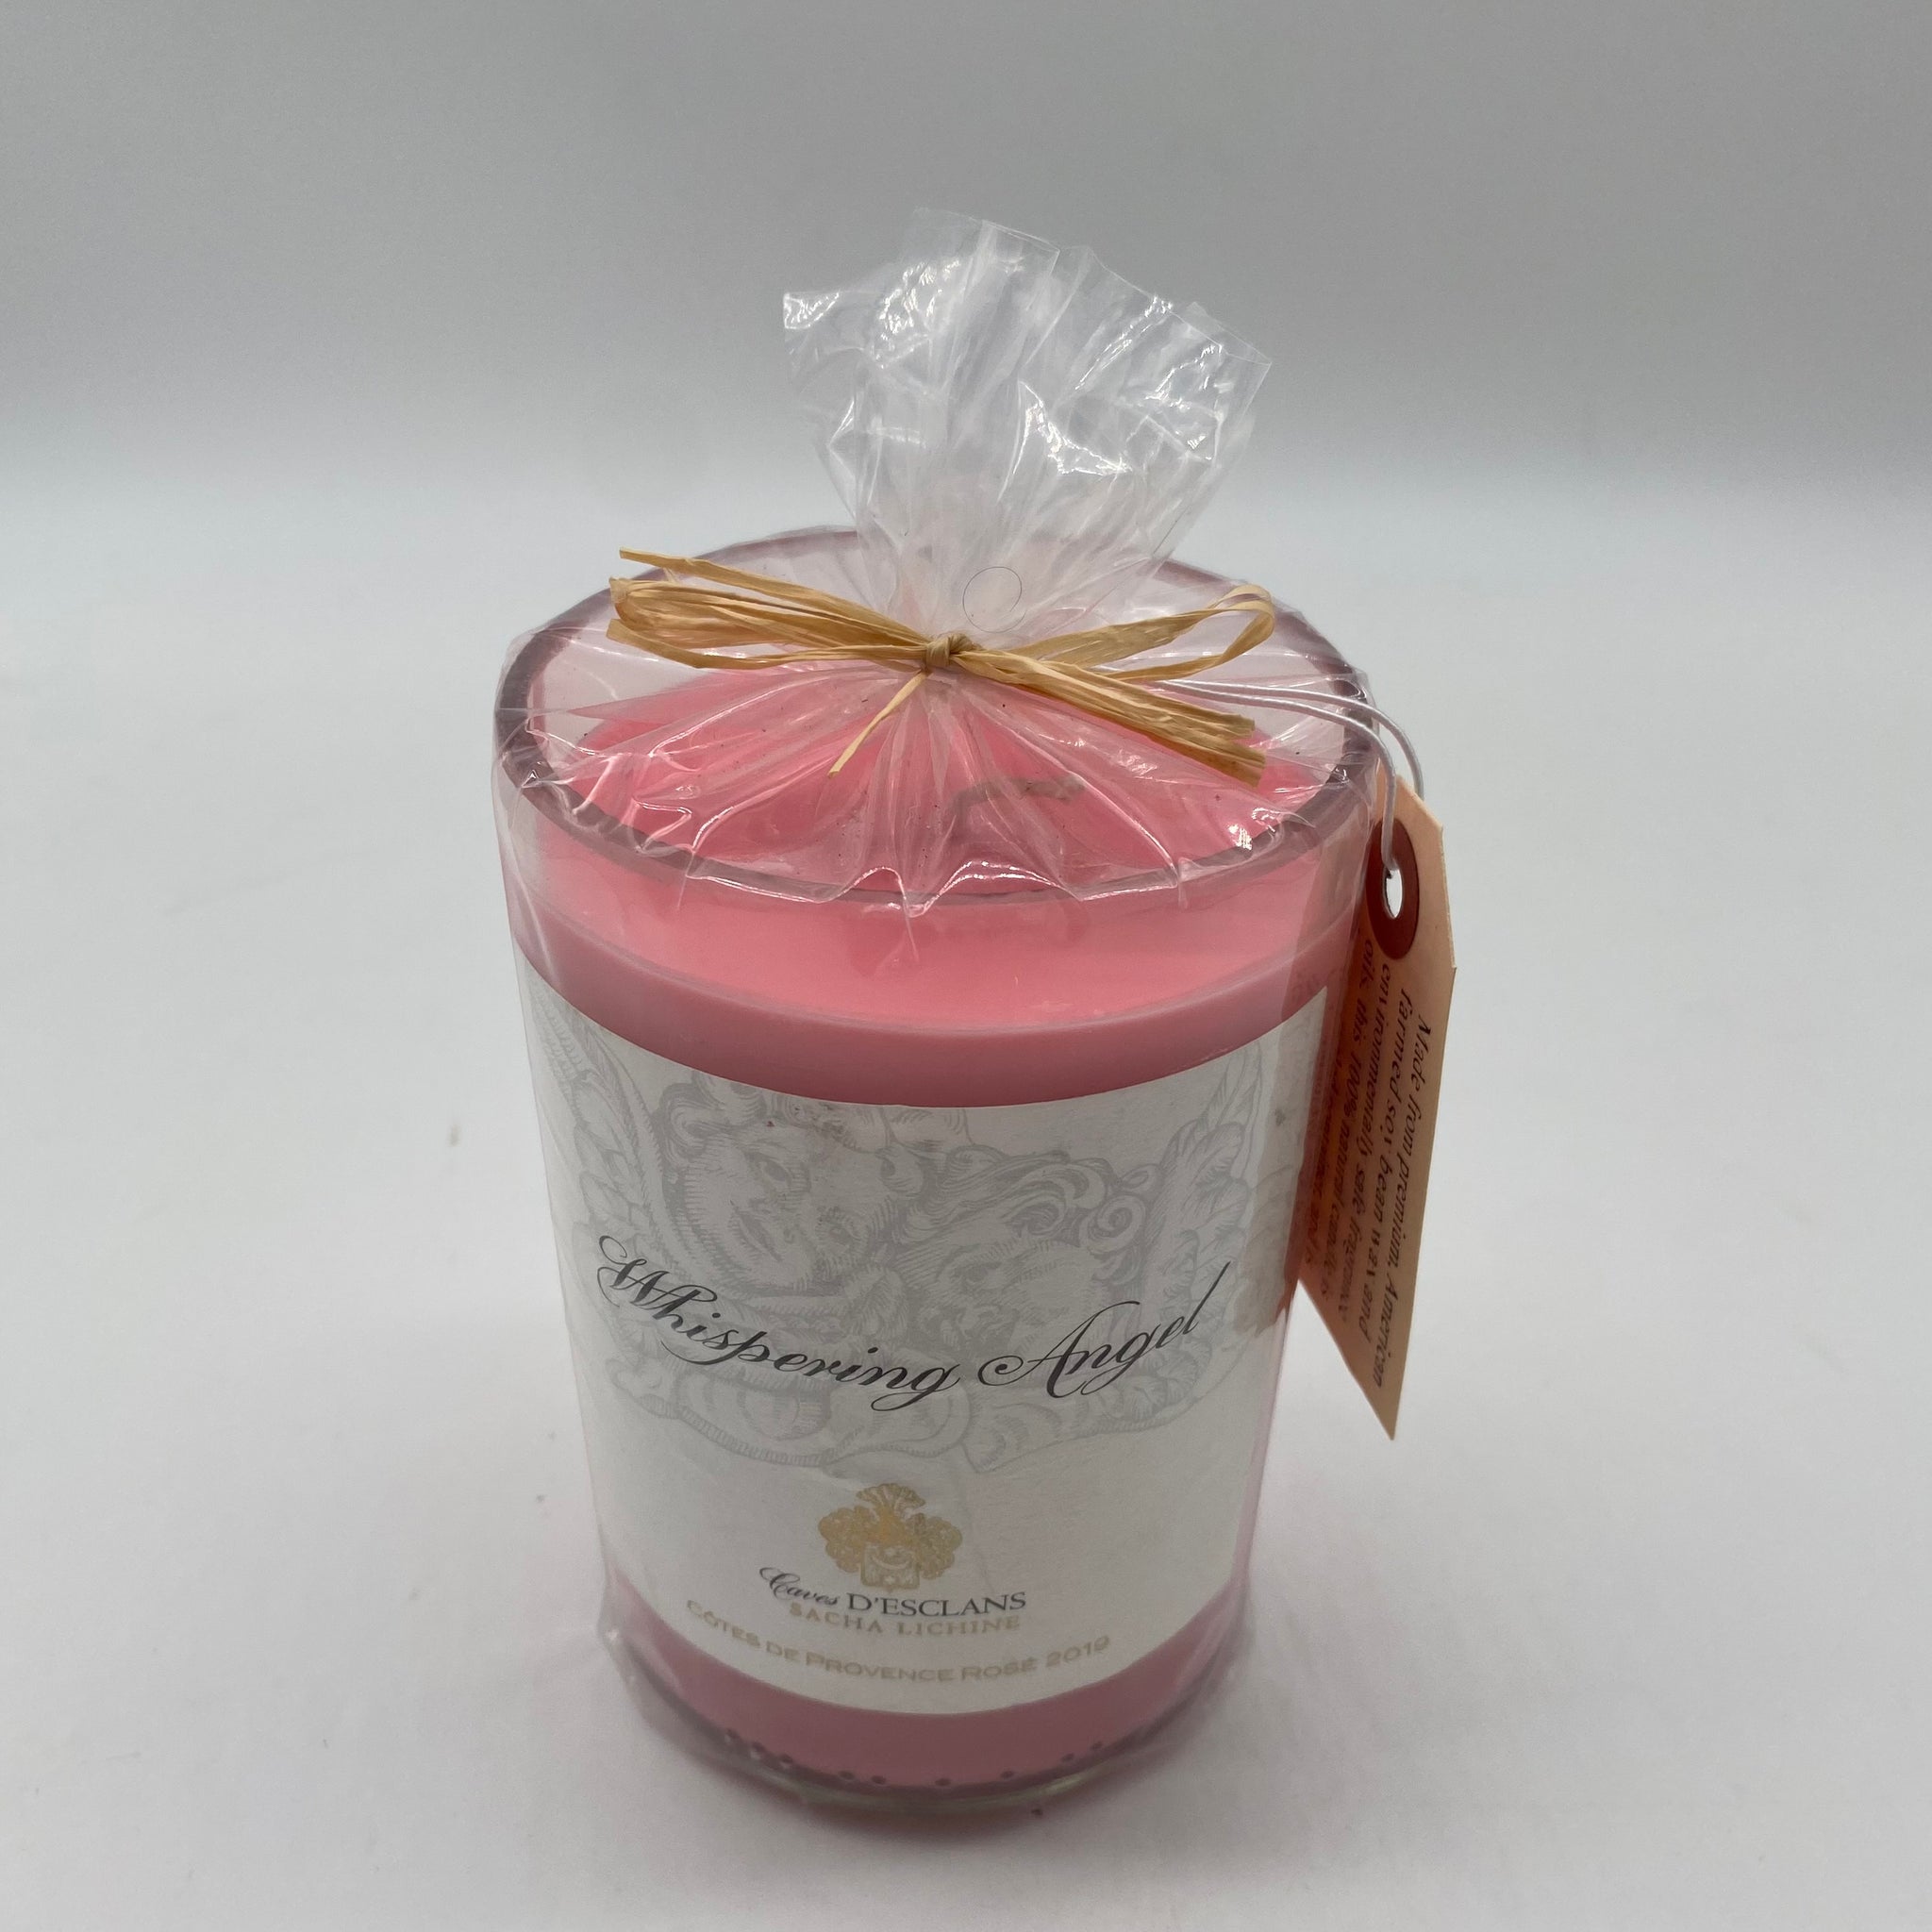 Whispering Angel pink grapefruit scented candle by Drunken Bottle